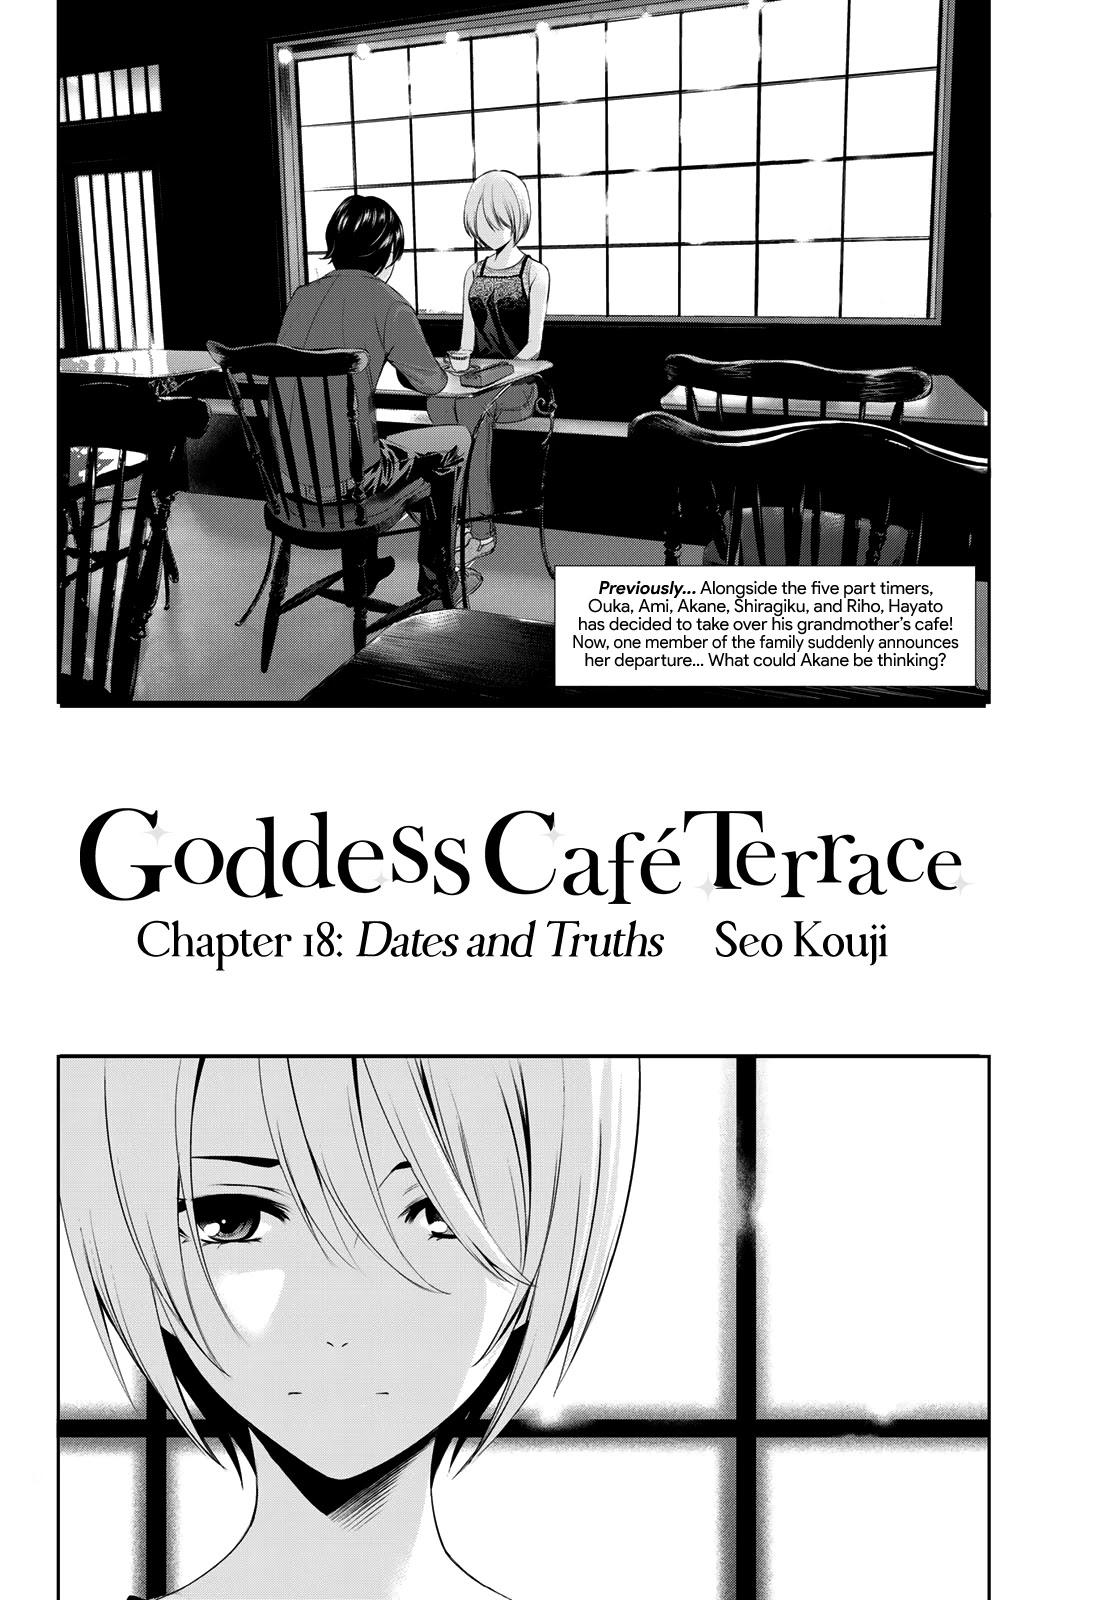 Megami no Café Terrace Capítulo 5 - Manga Online